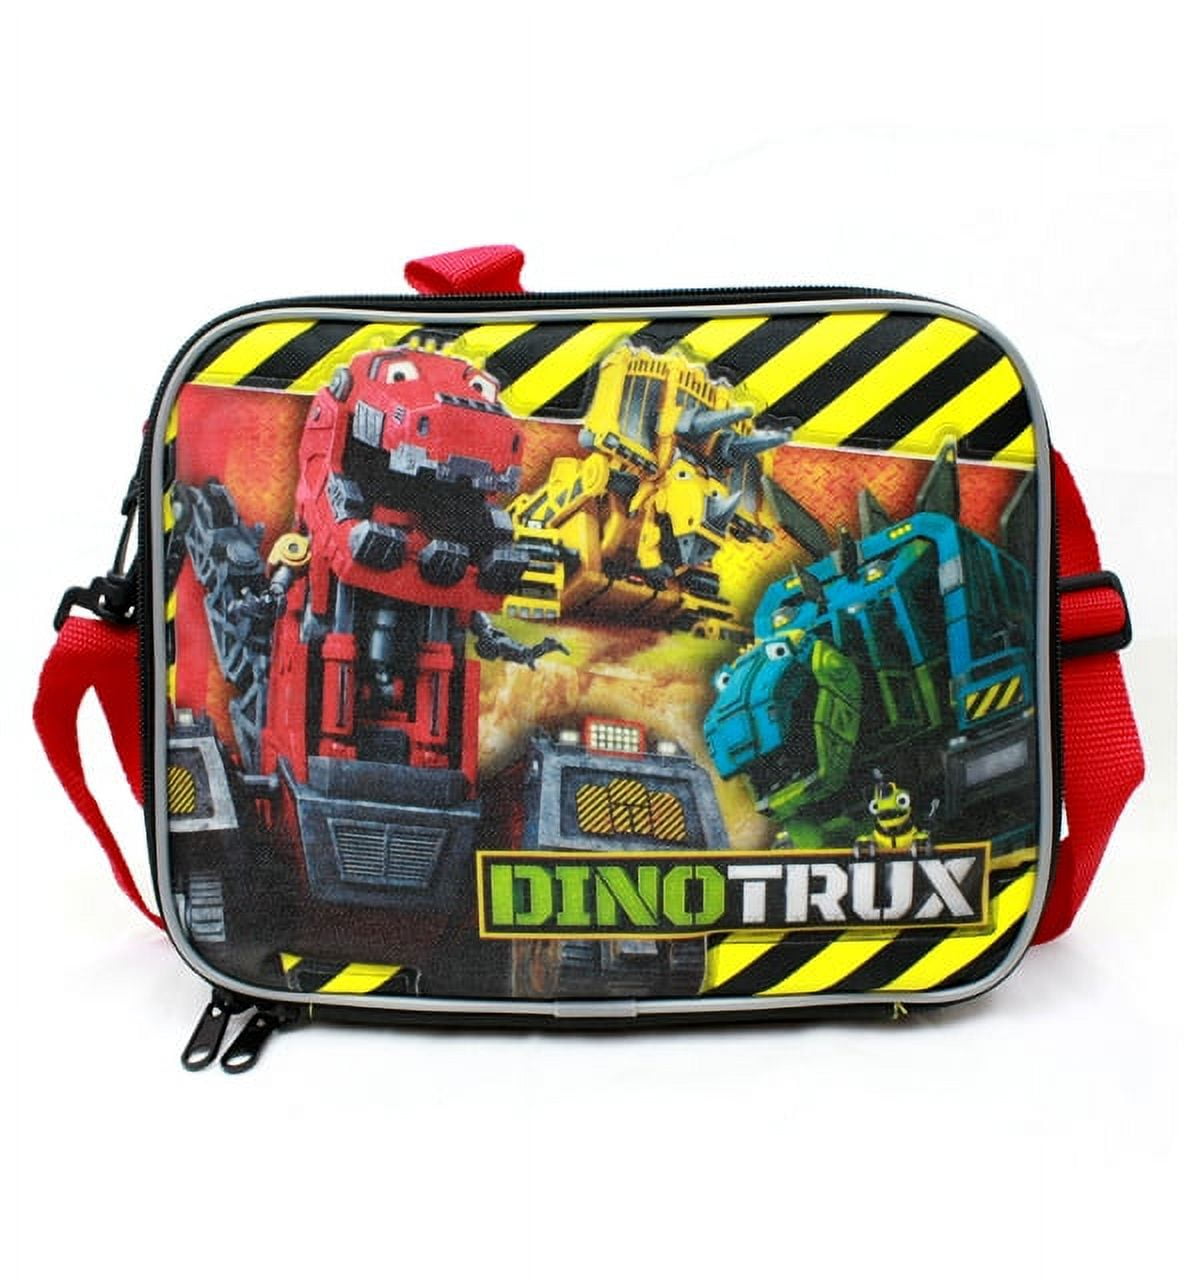 DinoTrux Lunch Bag Mega Team Black Lunchbox